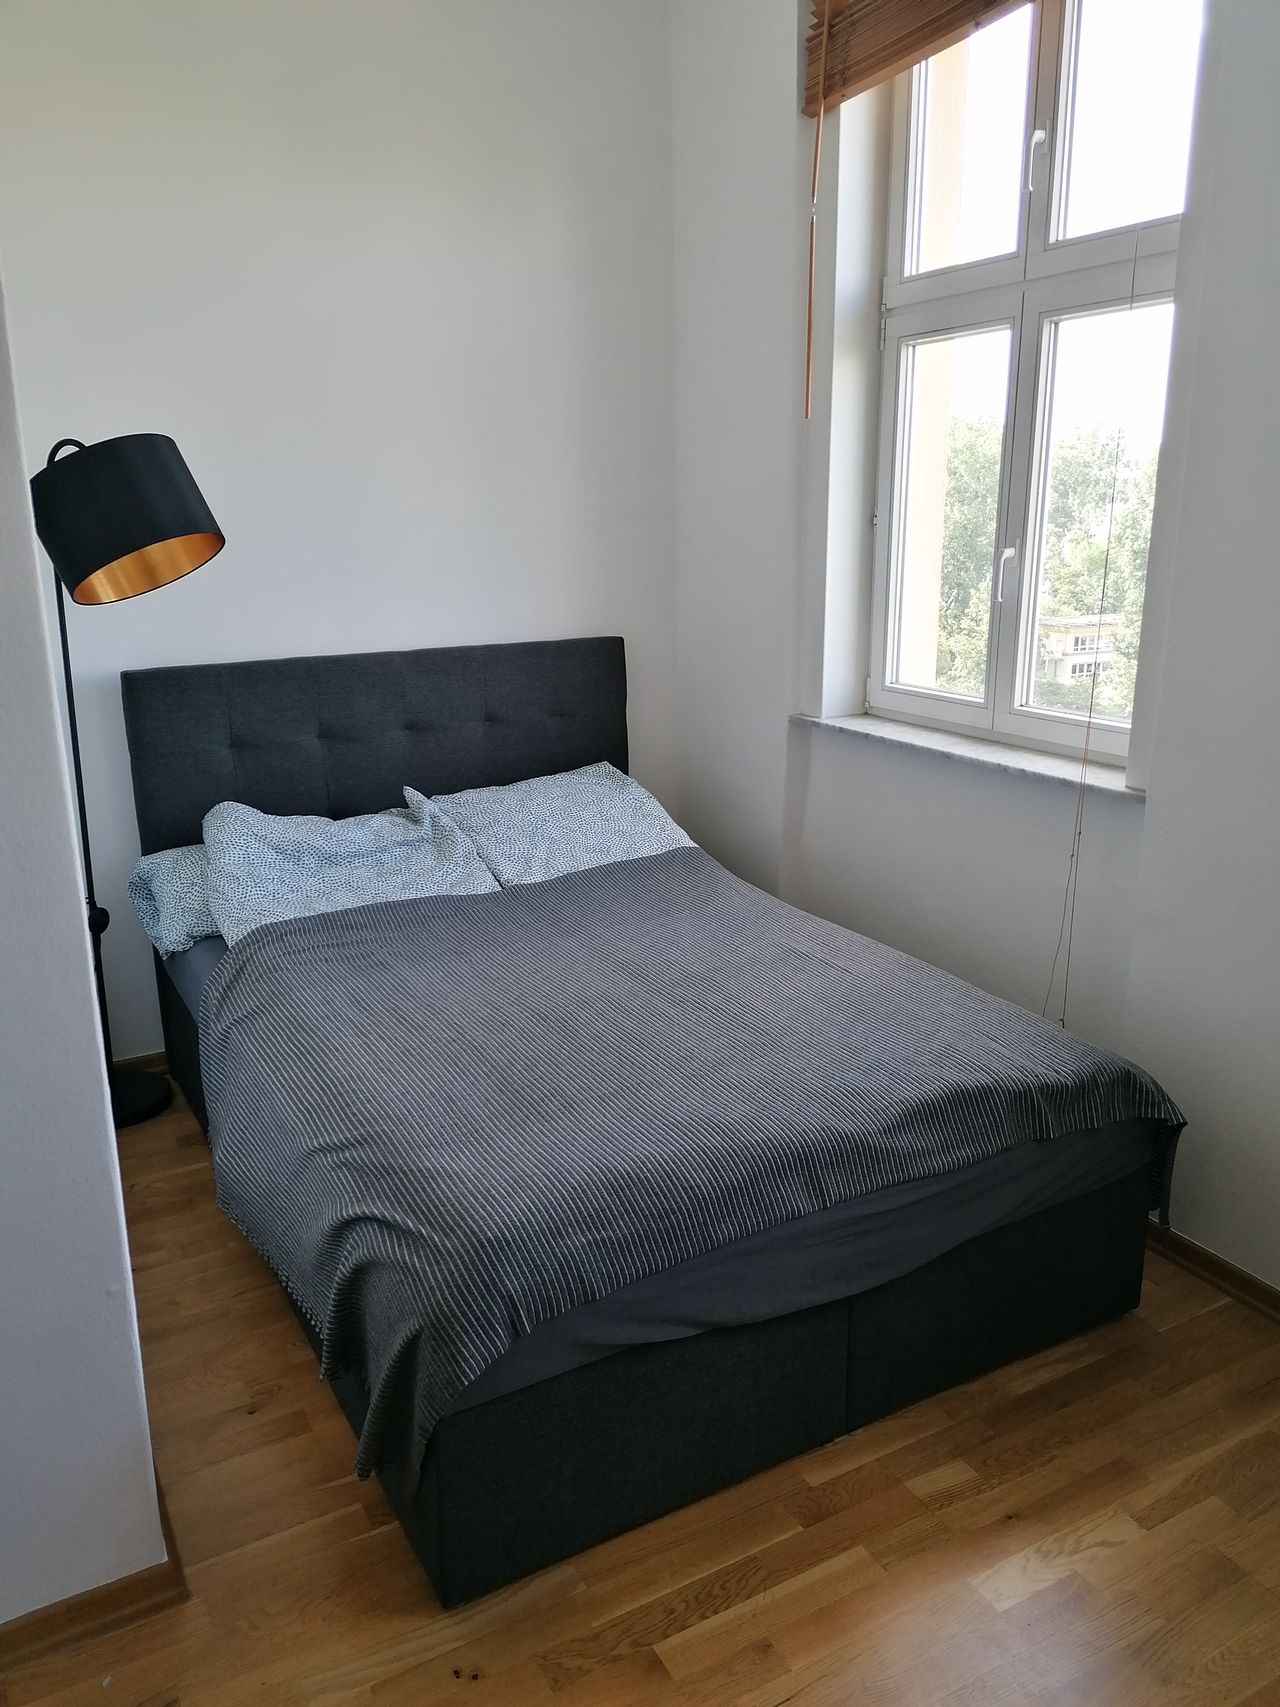 Spacious modern home in Friedrichshain: Bedroom + Livingroom with Daybed and Sleep Sofa + Balcony + Kitchen + Bathroom (Shared Flat)